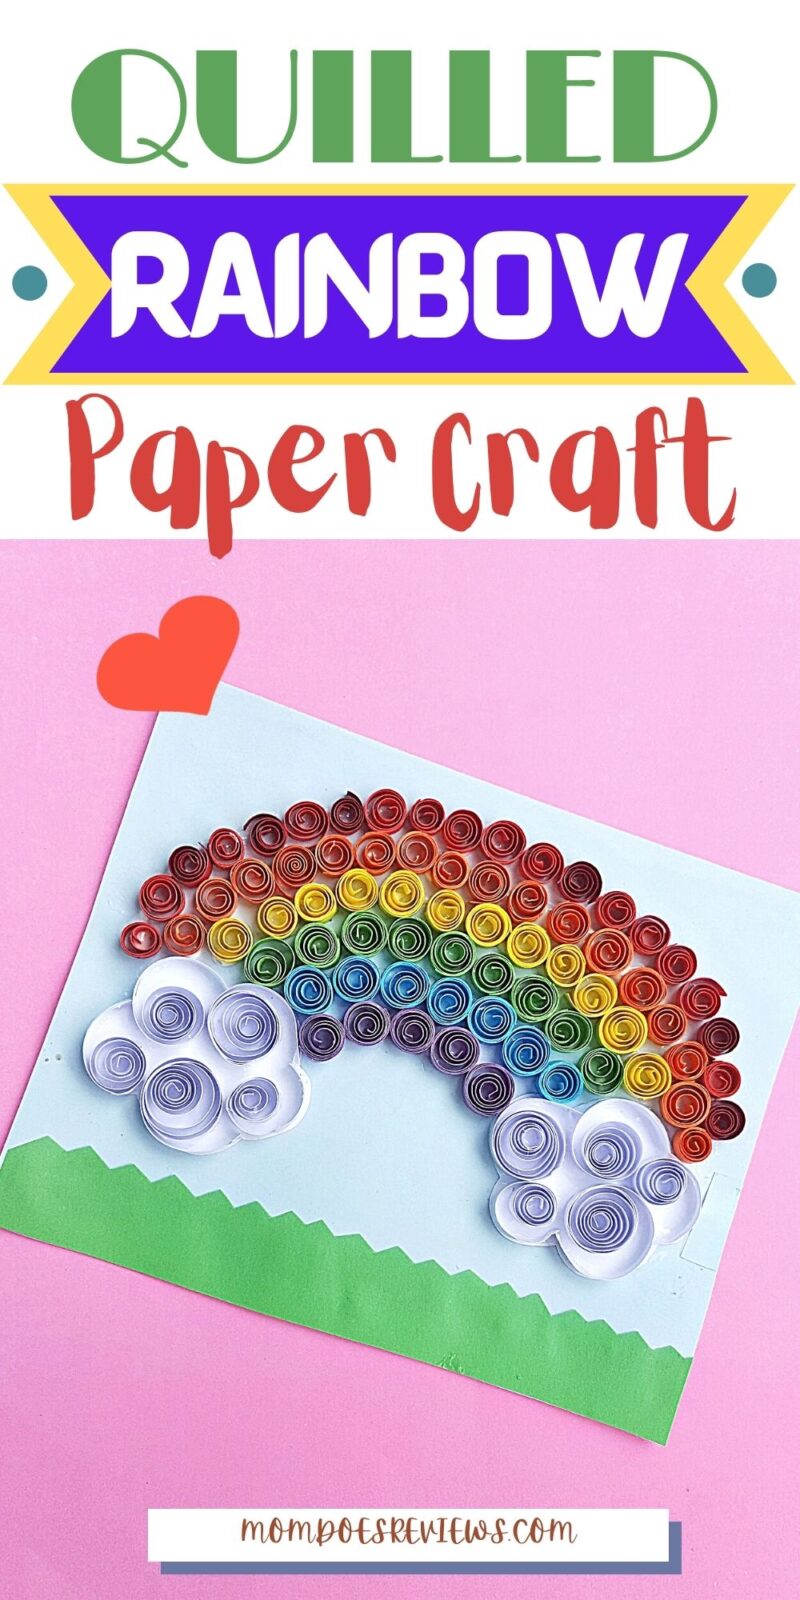 Rainbow Quilled Paper Craft